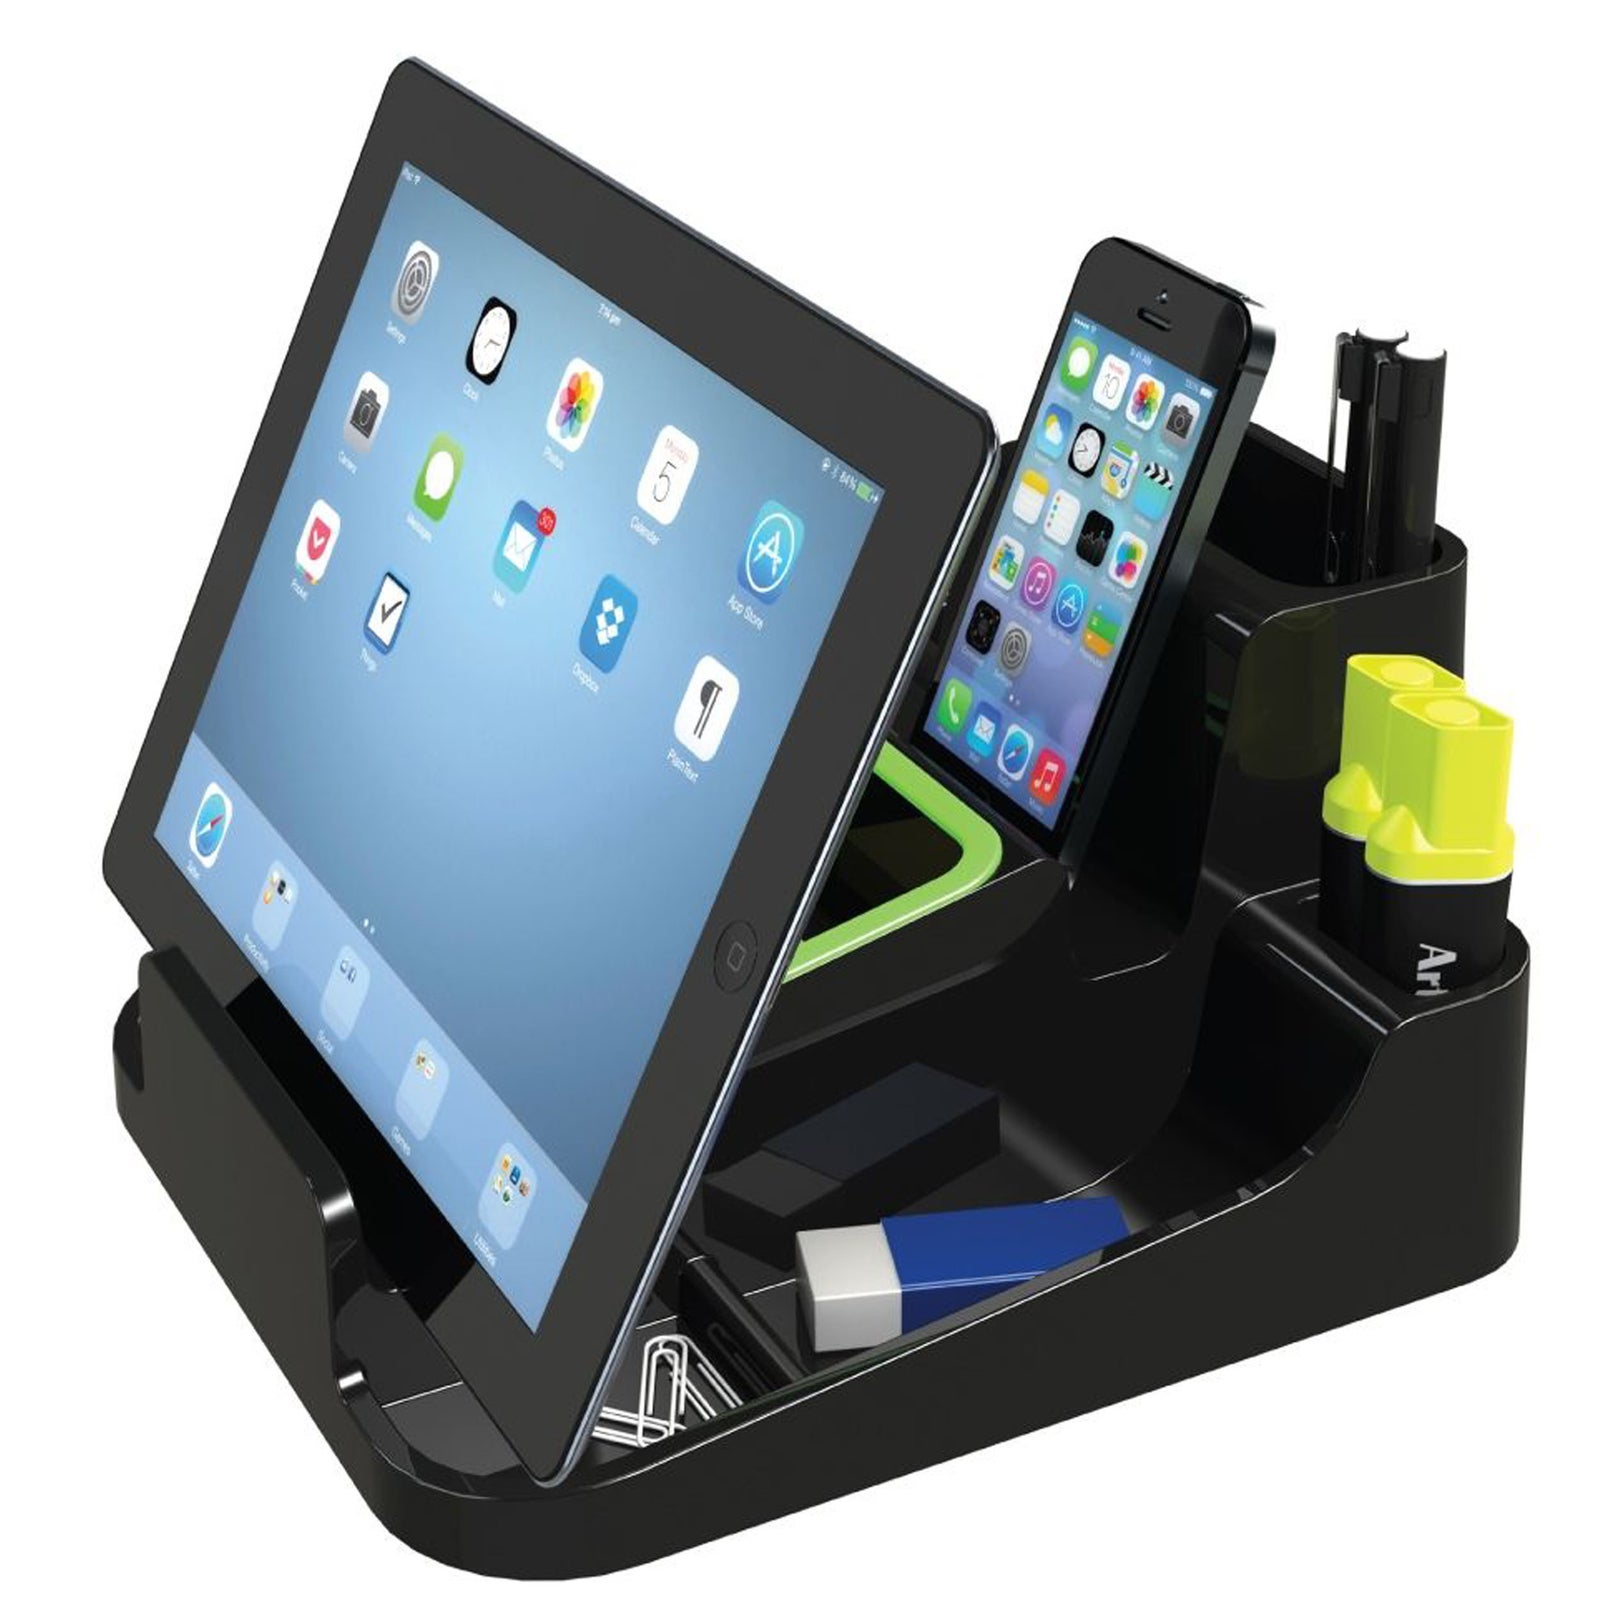 Esselte Smart Caddy Black Desk Stationary Organiser/Stand for Phone/Tablet/Pen